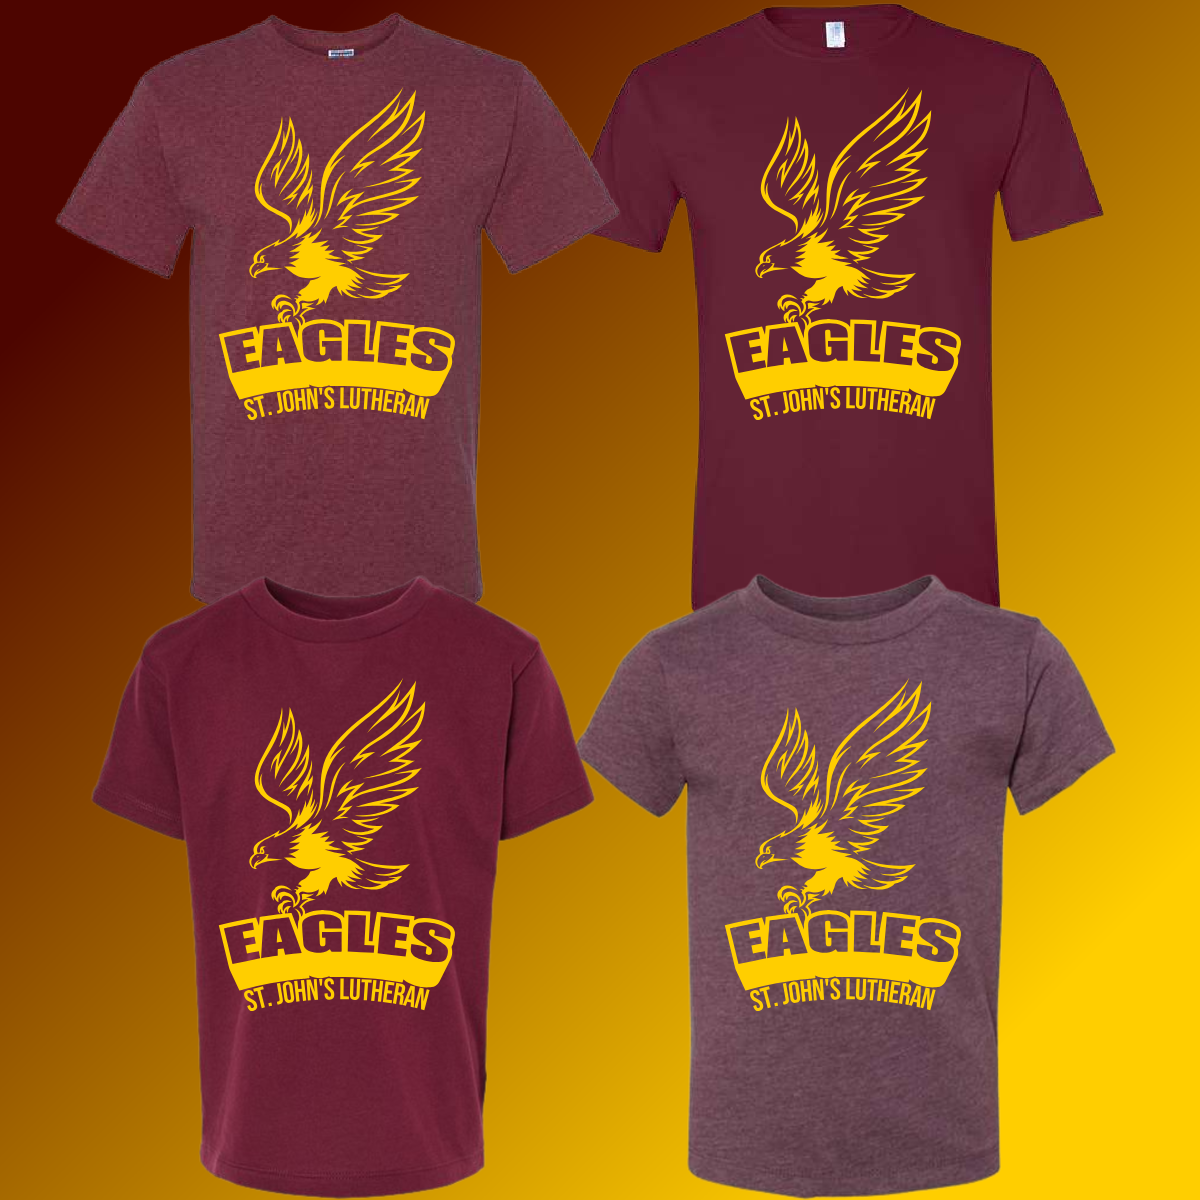 Eagles T-shirt Designs